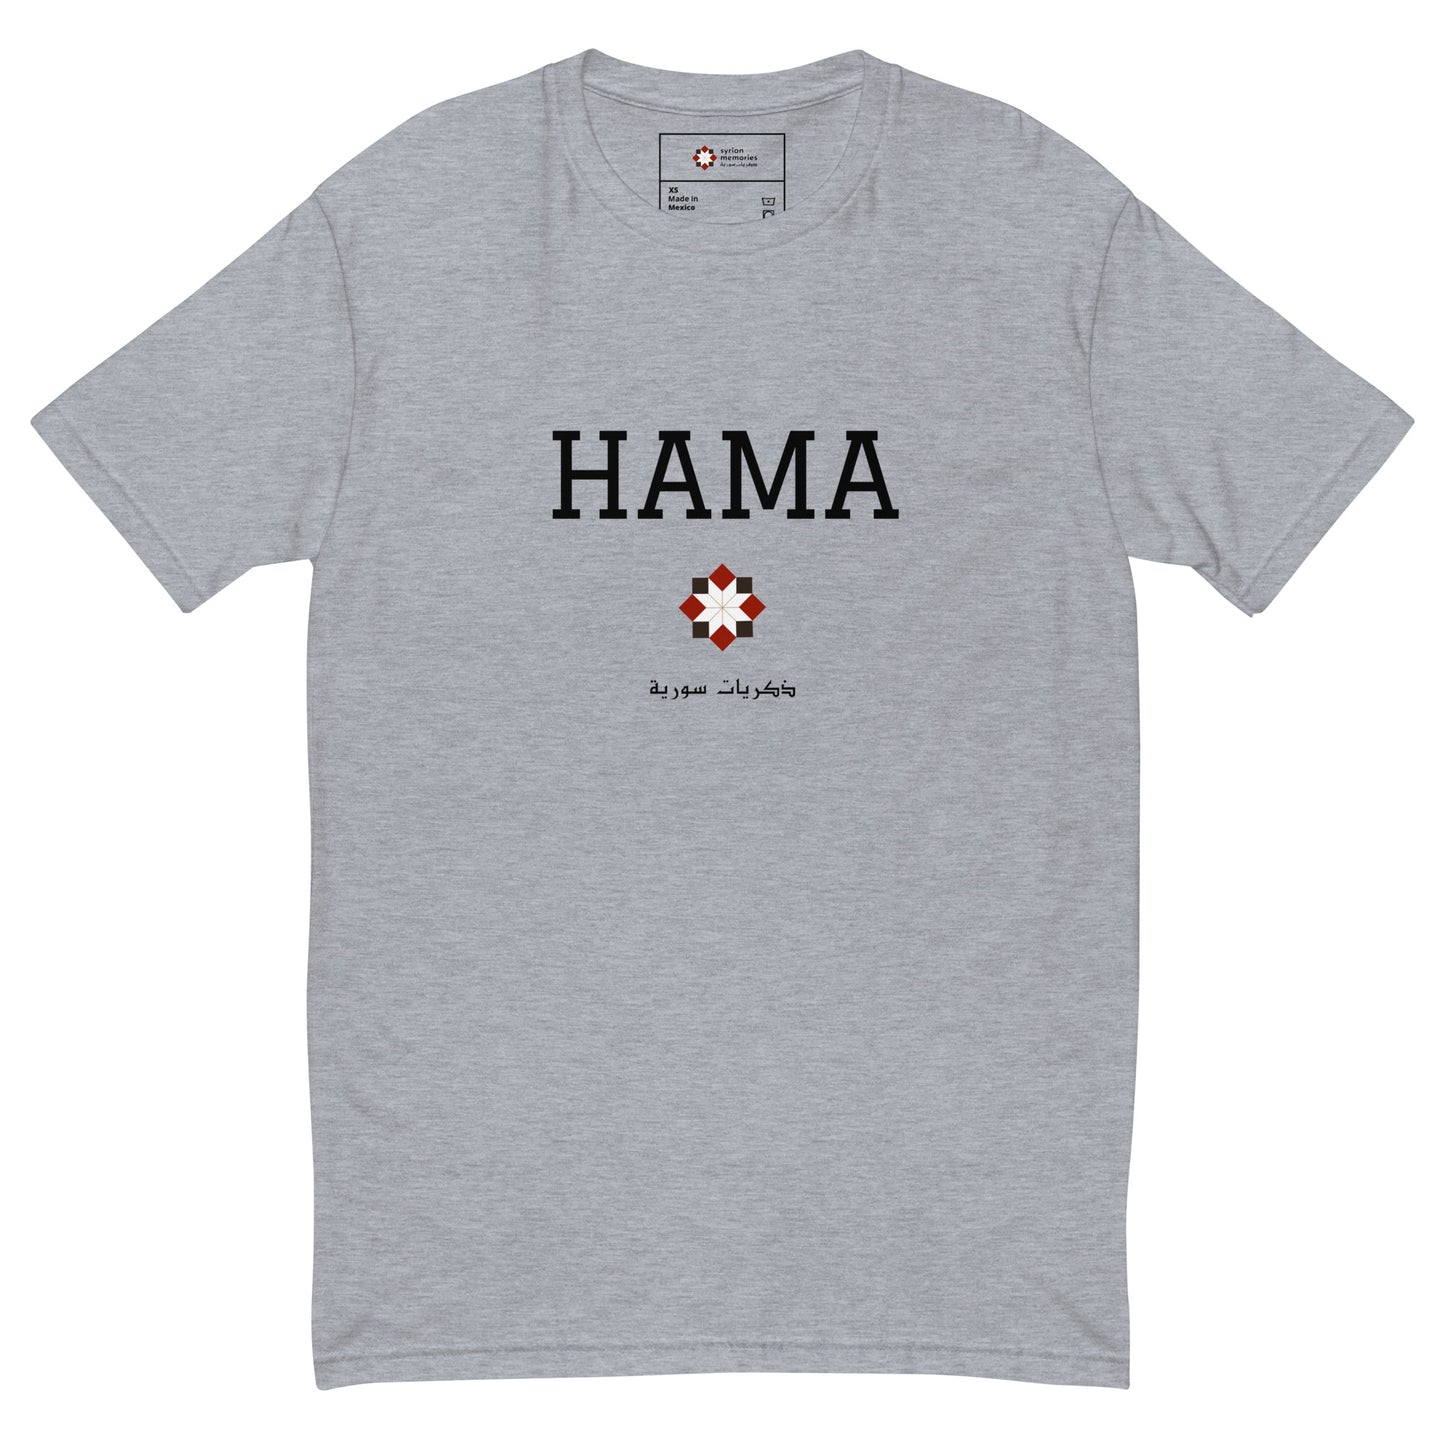 Hama - University Collection - Cotton T-shirt